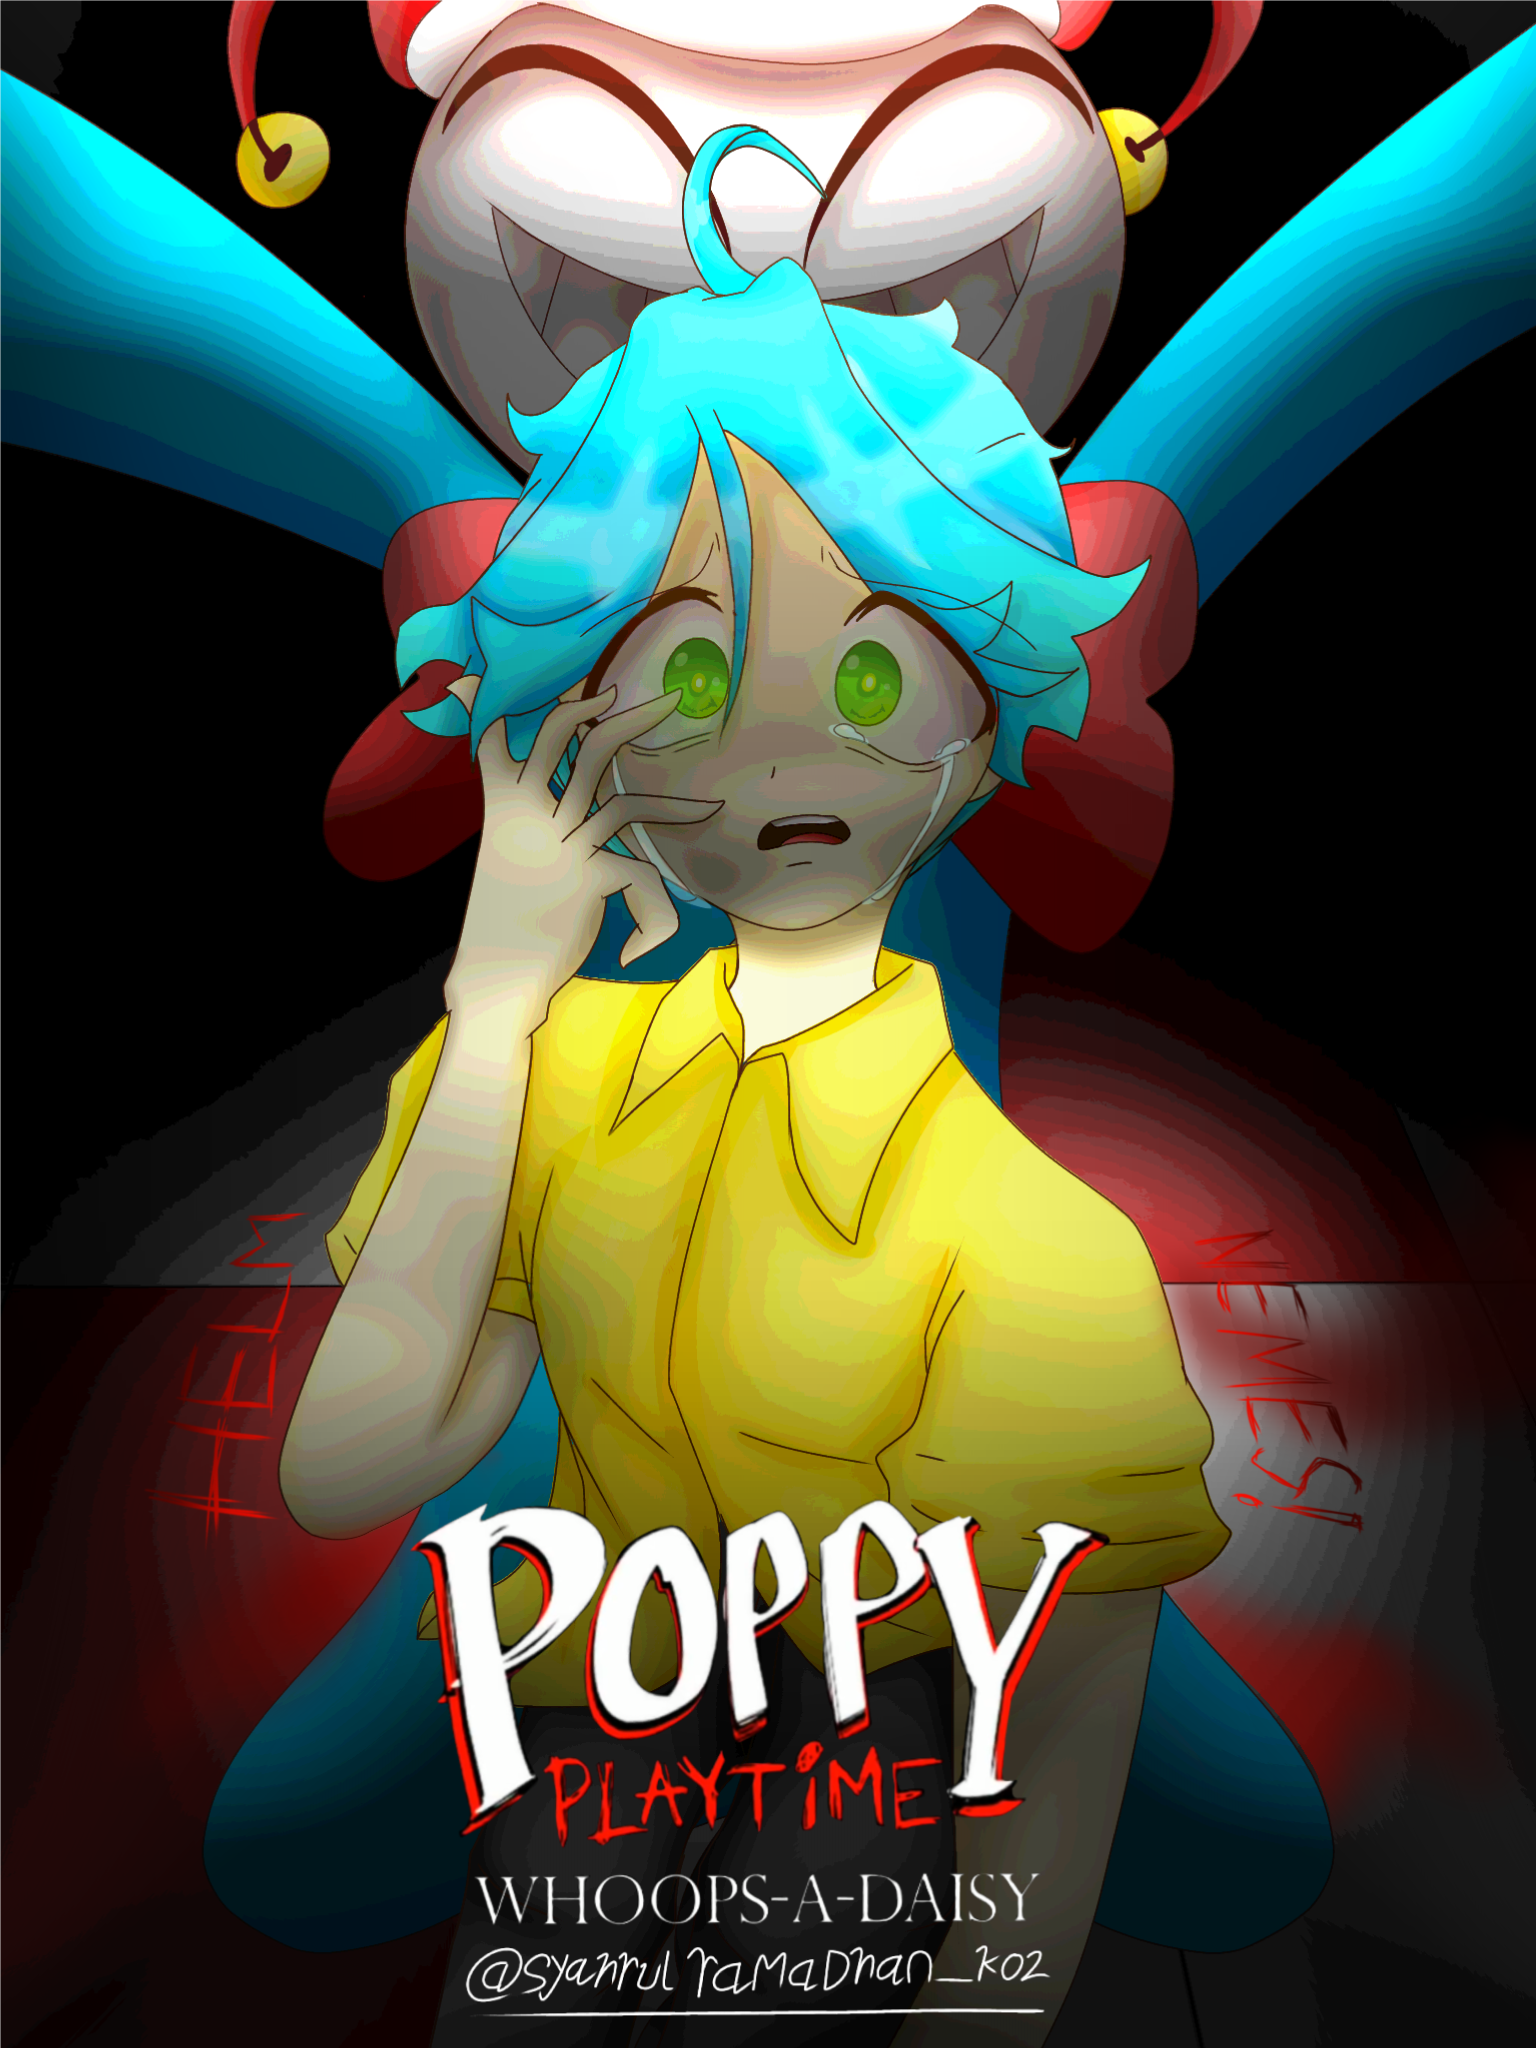 Core on X: Poppy Playtime capítulo 3 chega no Fim do Ano